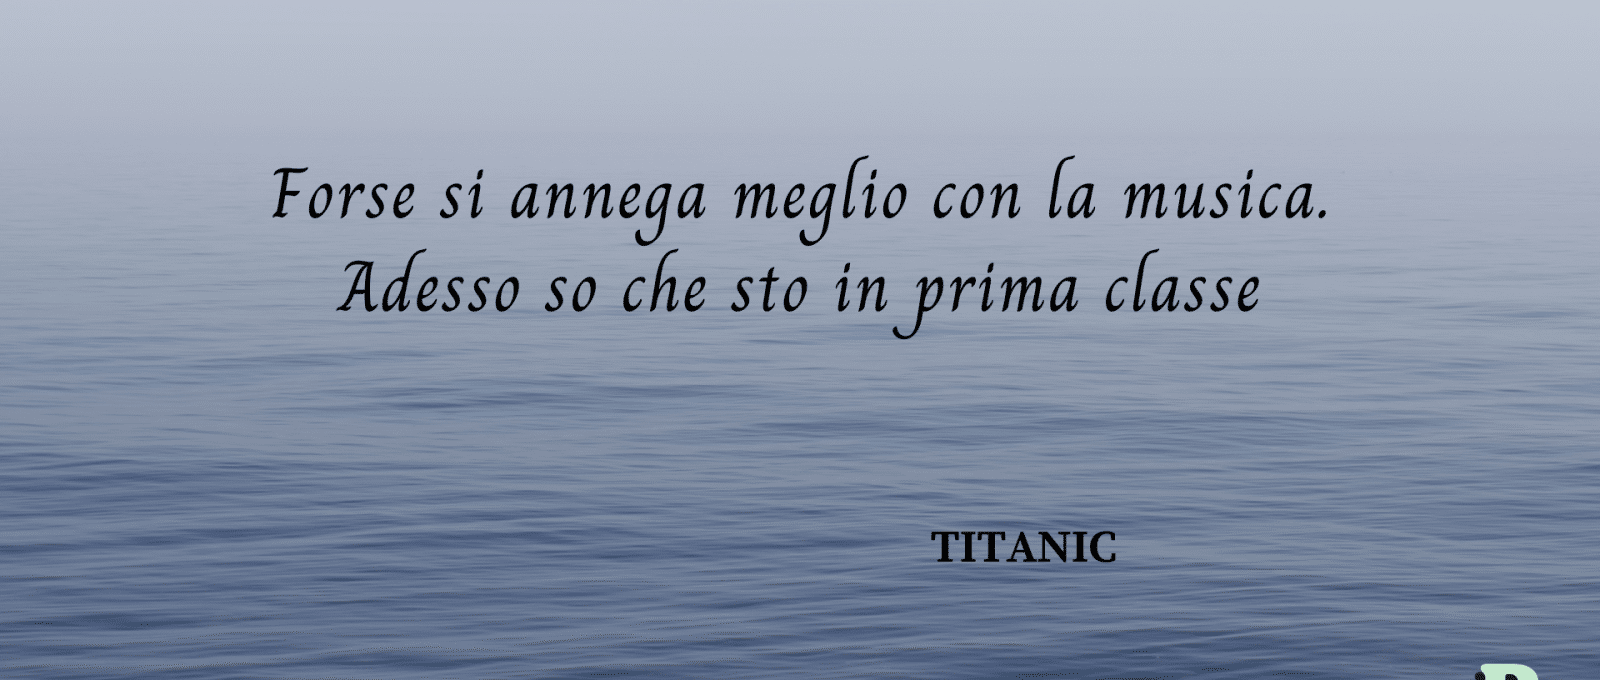 frasi titanic